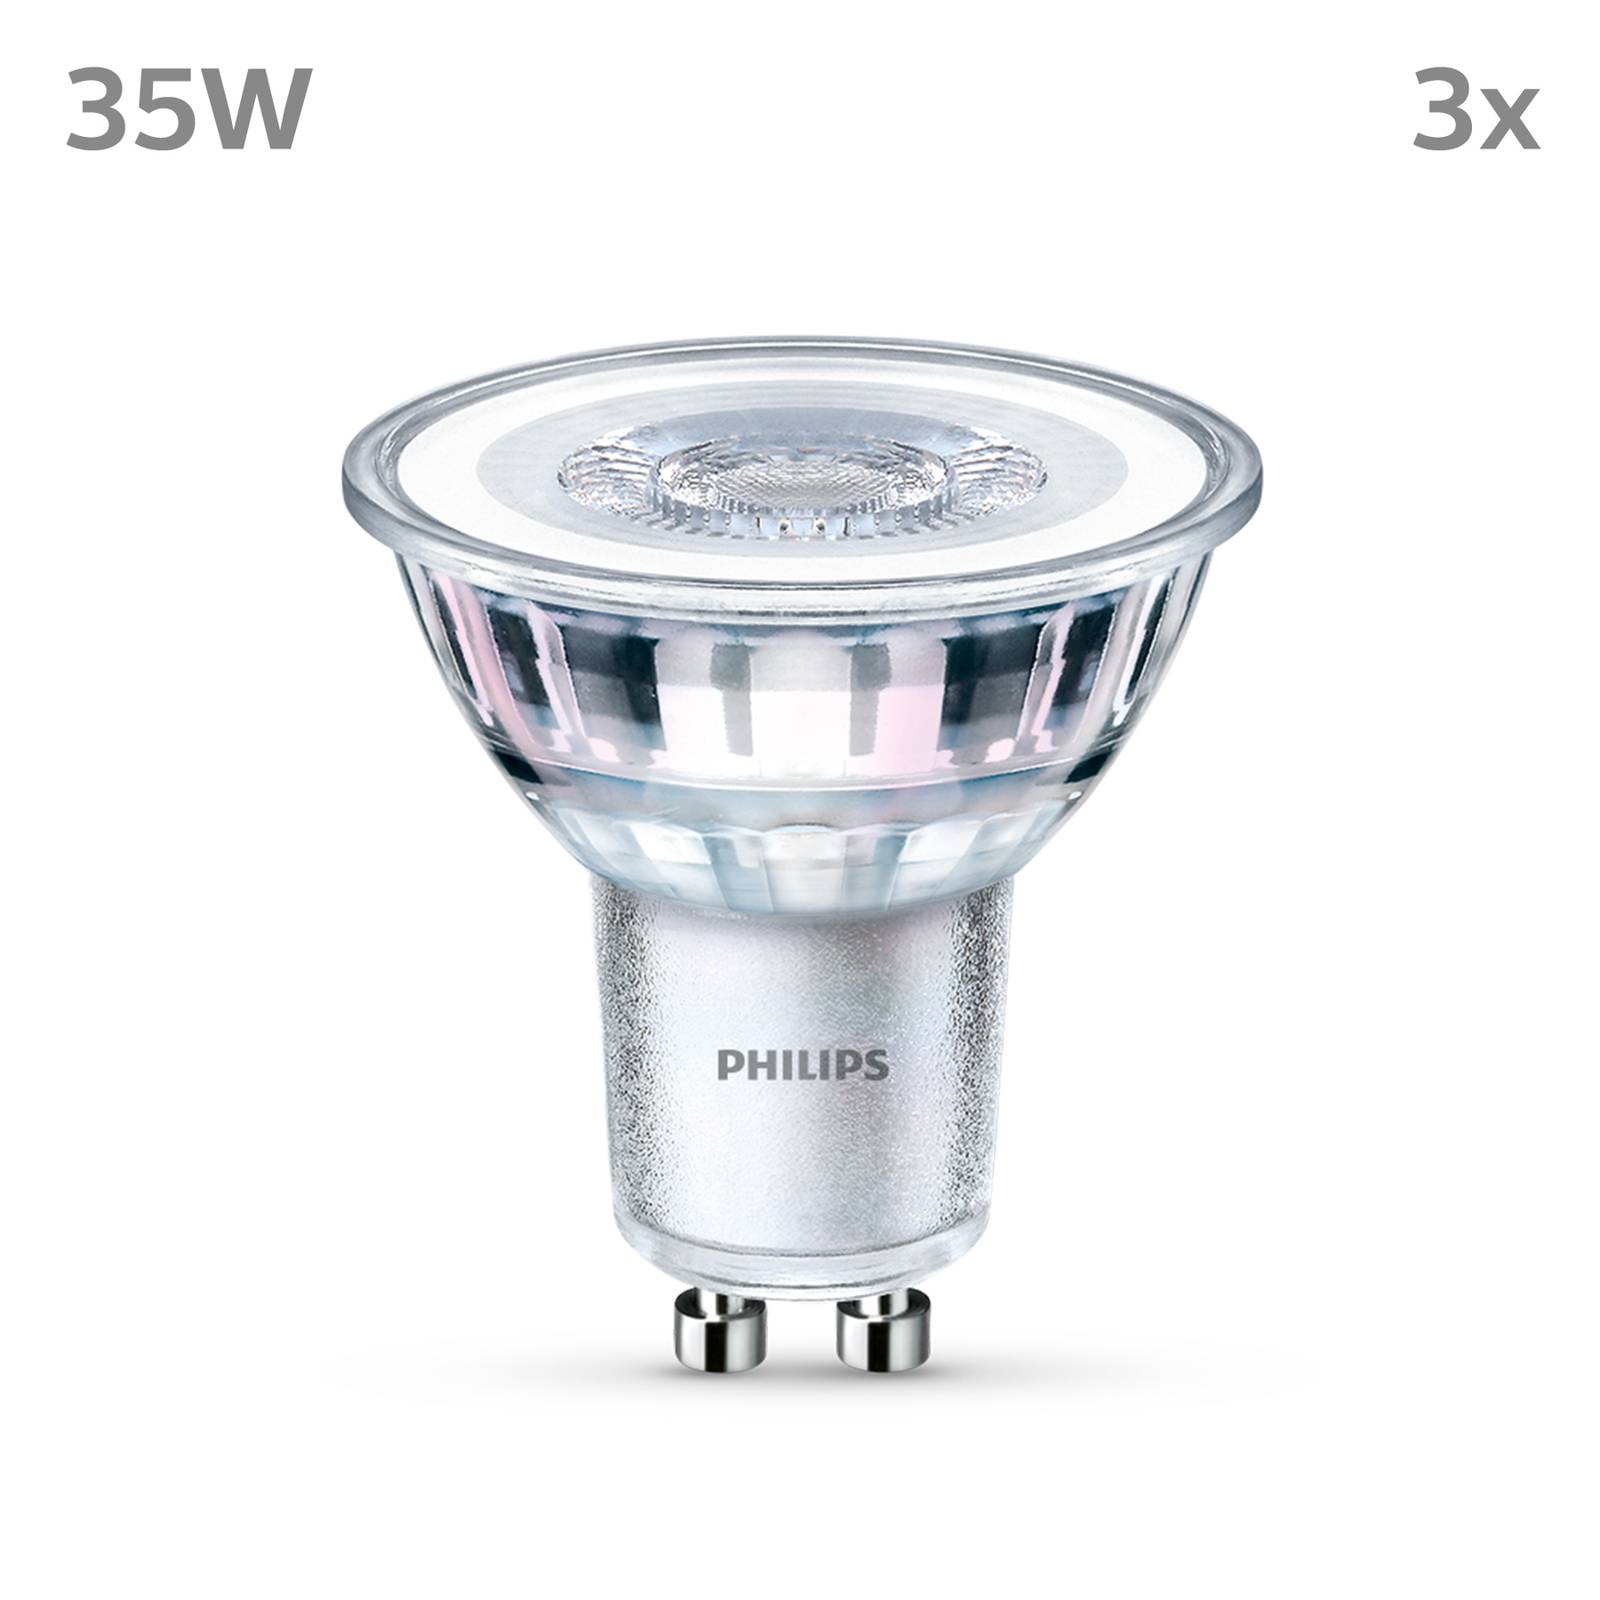 Philips LED izzó GU10 3,5W 275lm 840 átl. 36° 3db